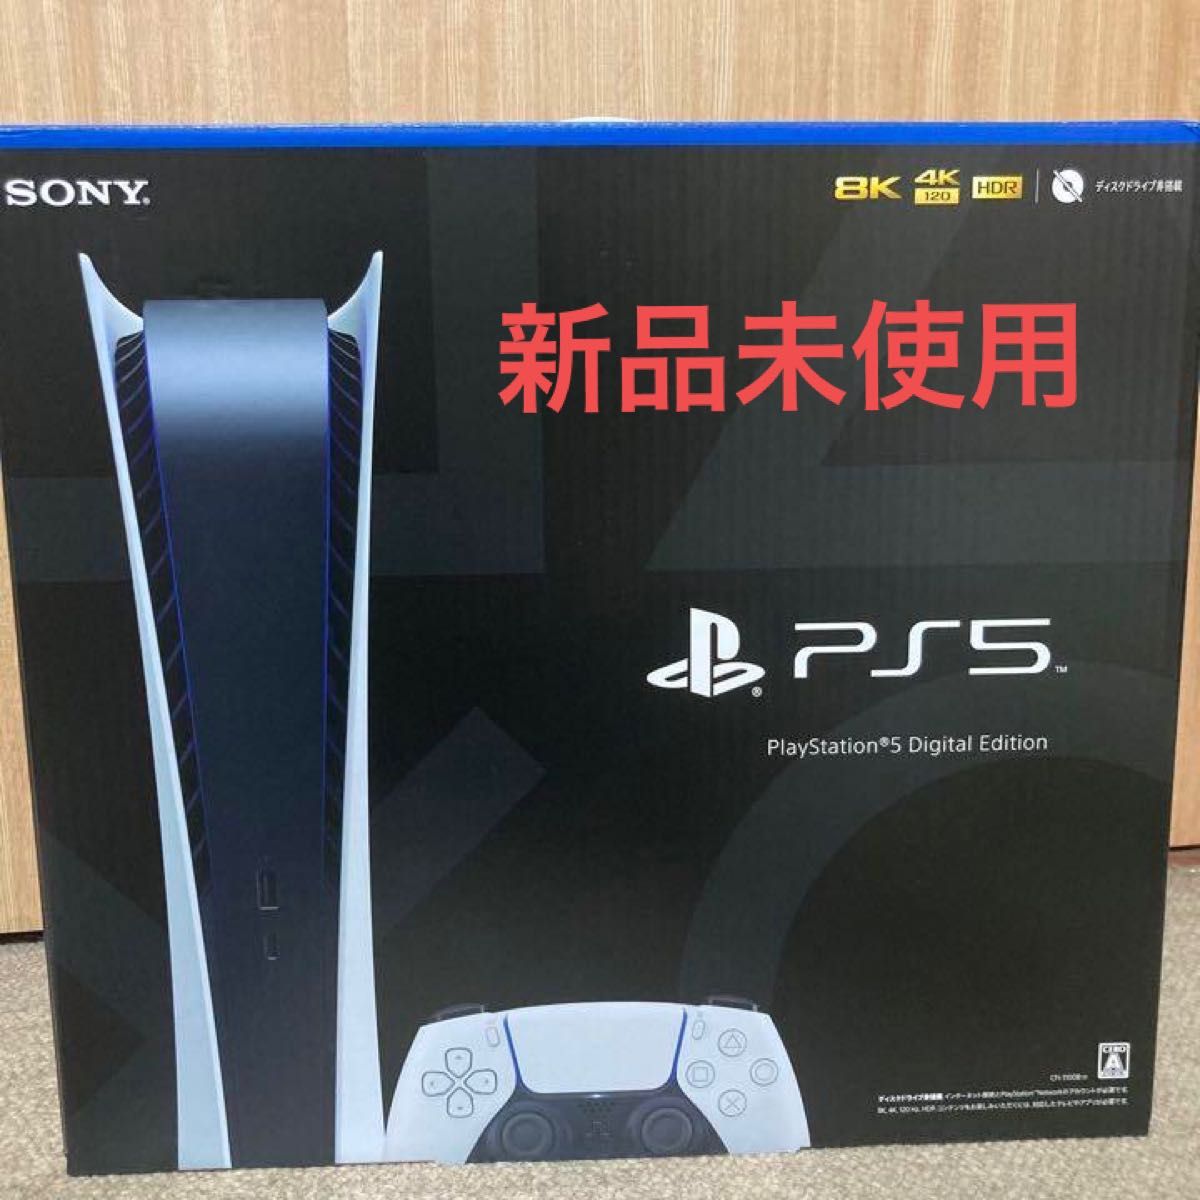 PS5 新型 CFI-1200B01 プレイステーション5 デジタルエディション - beringtime.in